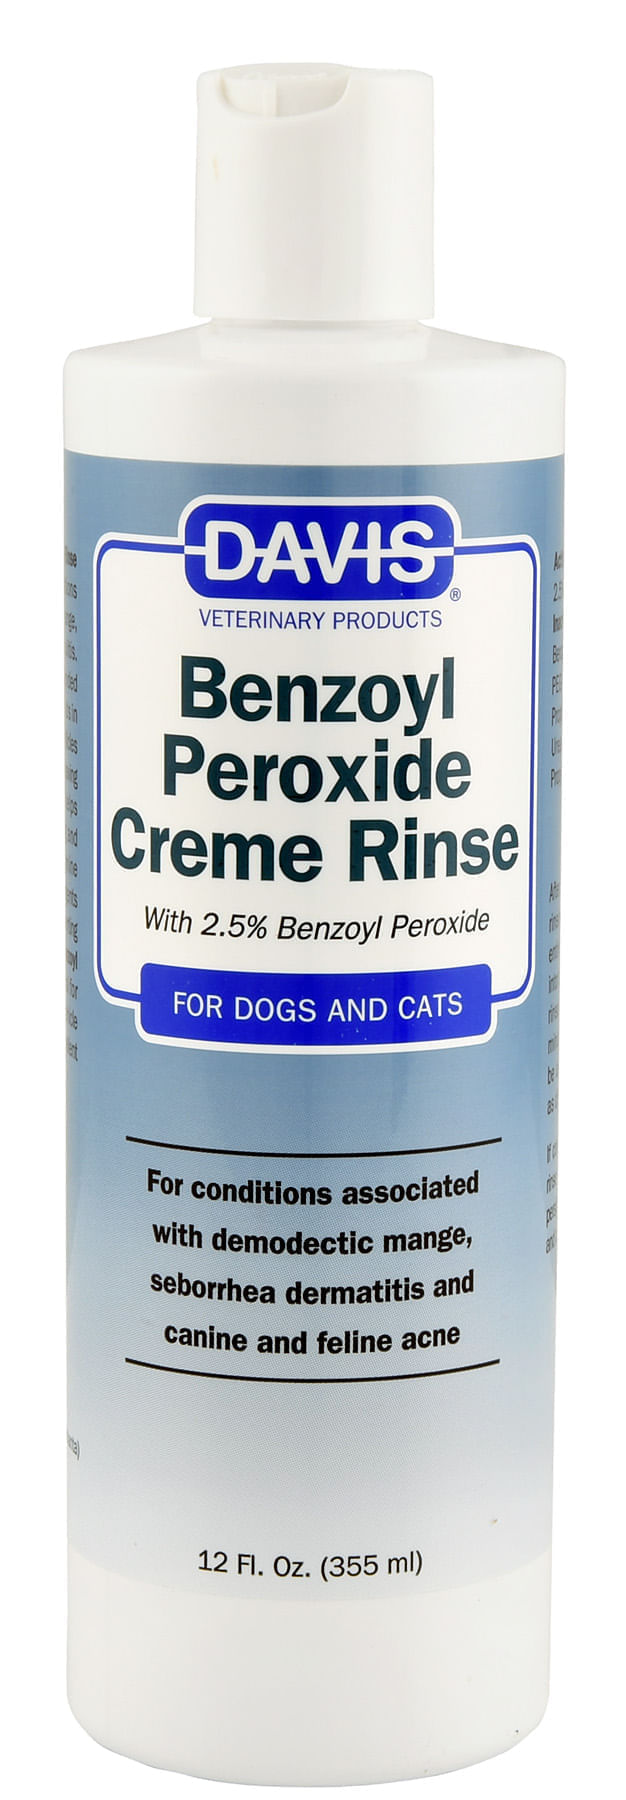 Davis-Benzoyl-Peroxide-Creme-Rinse